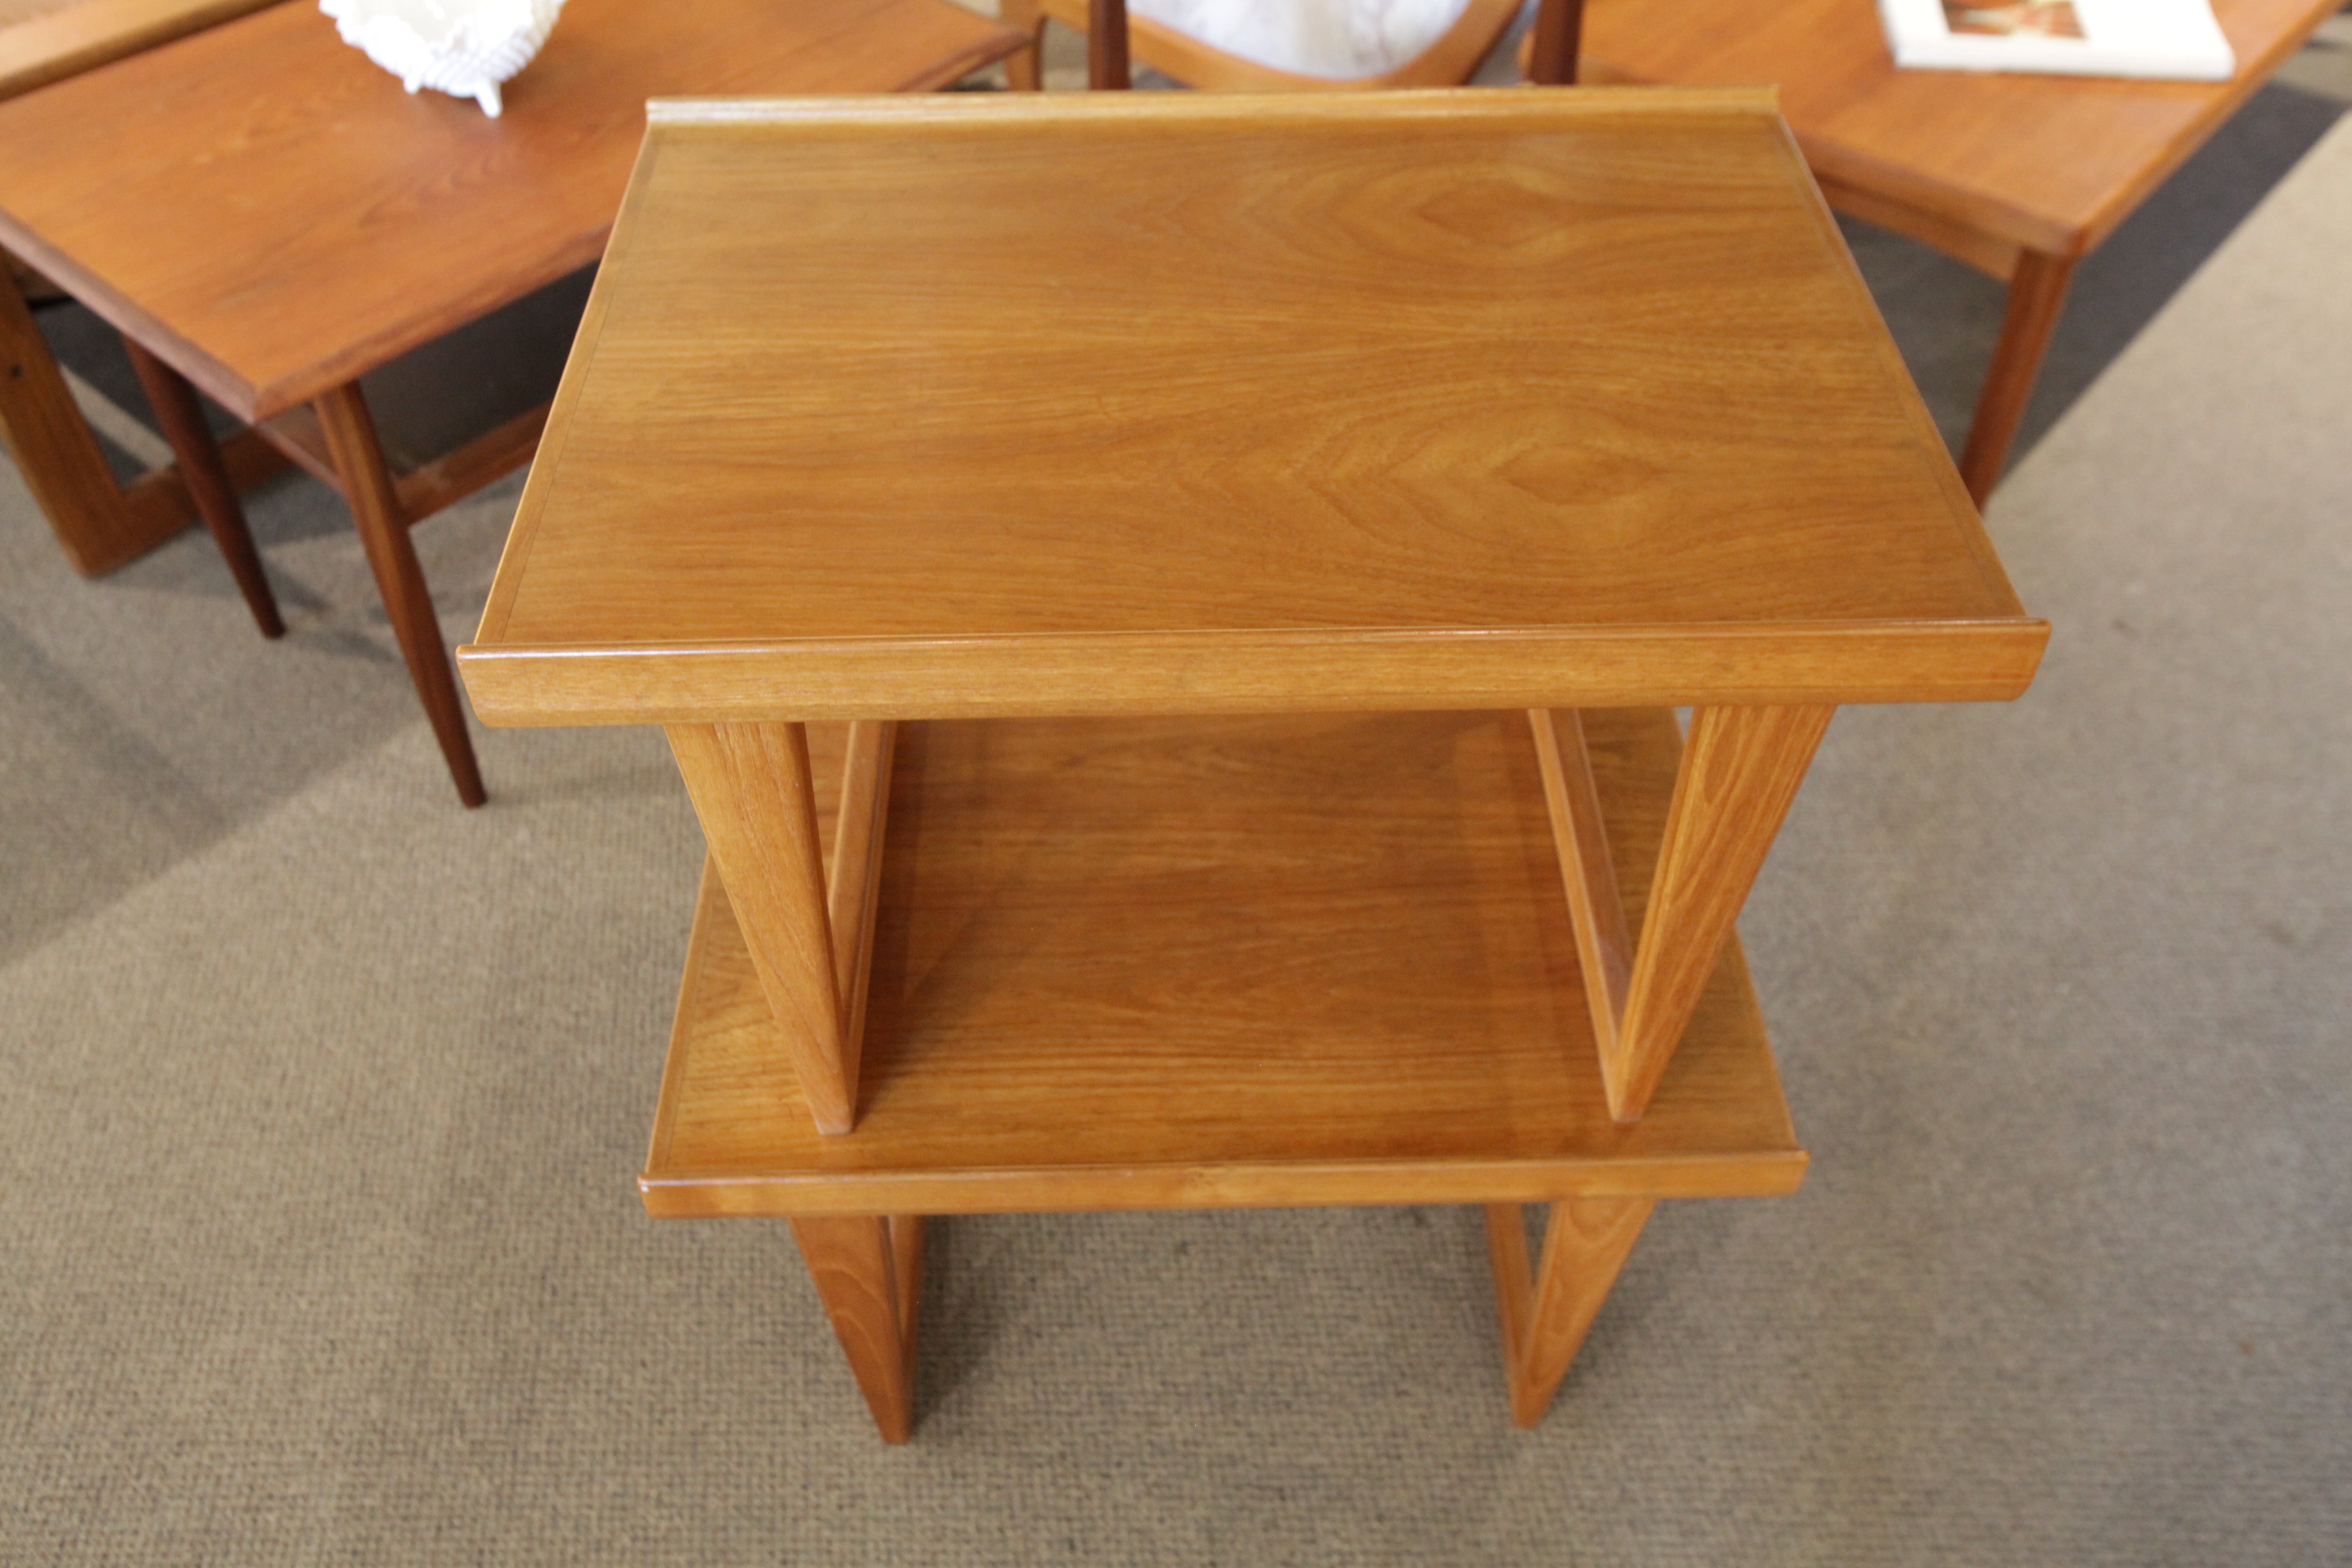 Vintage Danish Teak Side Table (25" x 18.25" x 16"H)